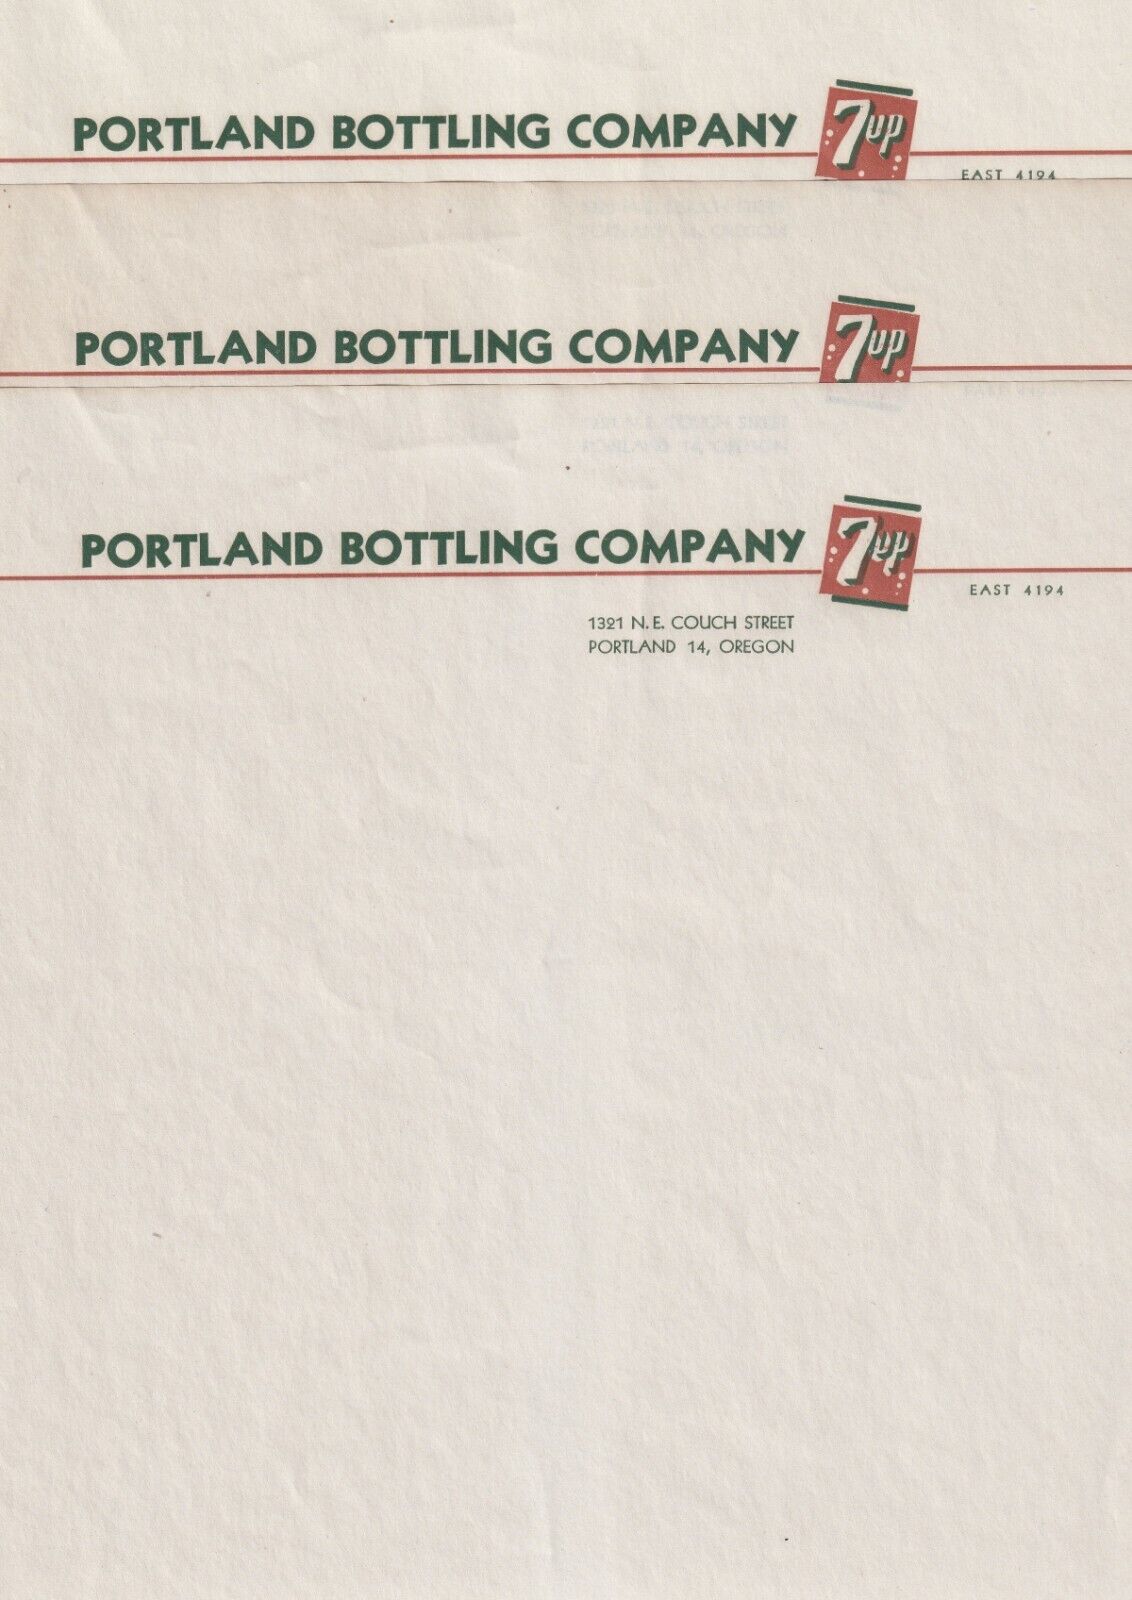 7 Up Portland Bottling Company Early Letterhead Lot of 10 Unused Soda Uncola